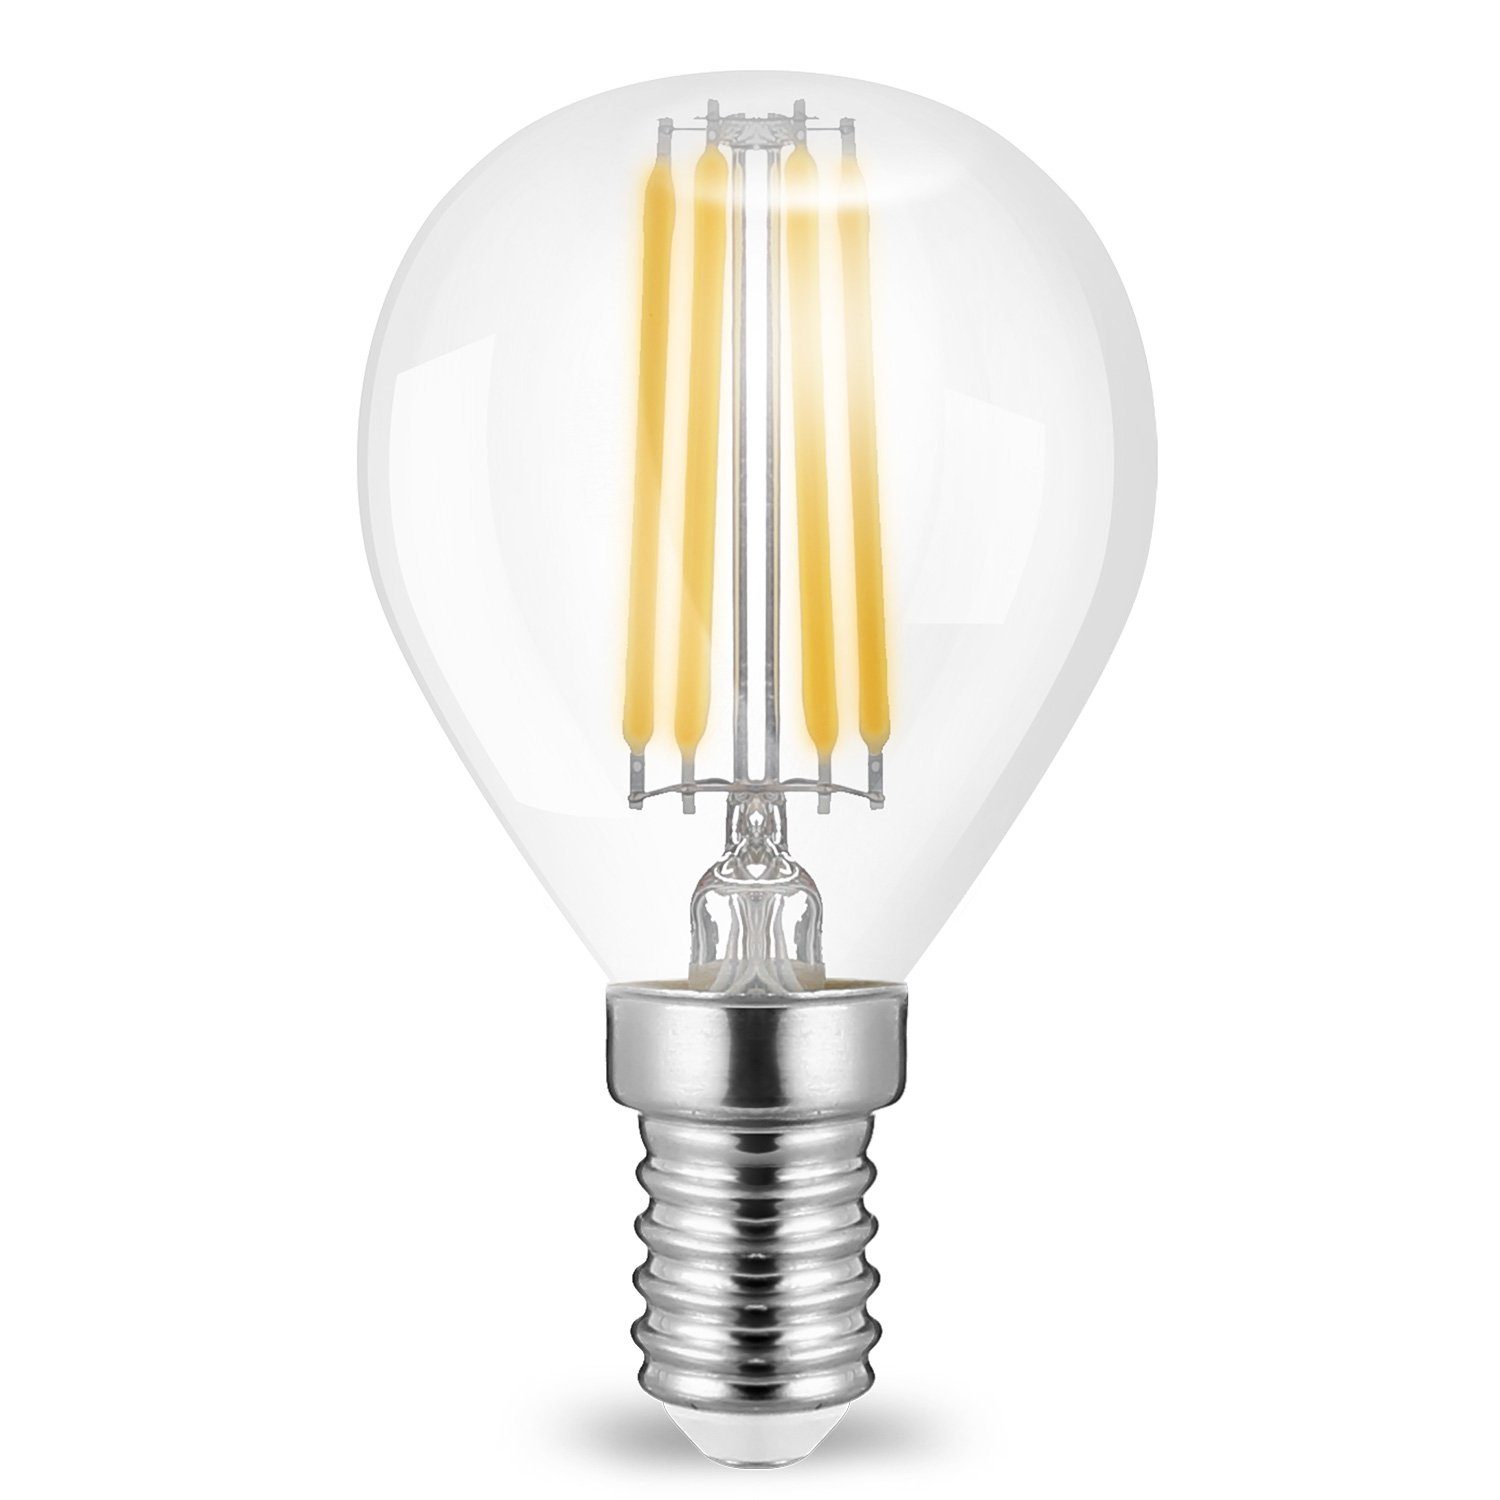 Modee Smart Lighting LED-Leuchtmittel 4 W E14 Filament LED Leuchtmittel Leuchte Birne, 1 St., Warmweiß, G45 Form 4W E14 360° Mini Birne Filament Kugel 470 Lumen Eck klar Glas 2700K